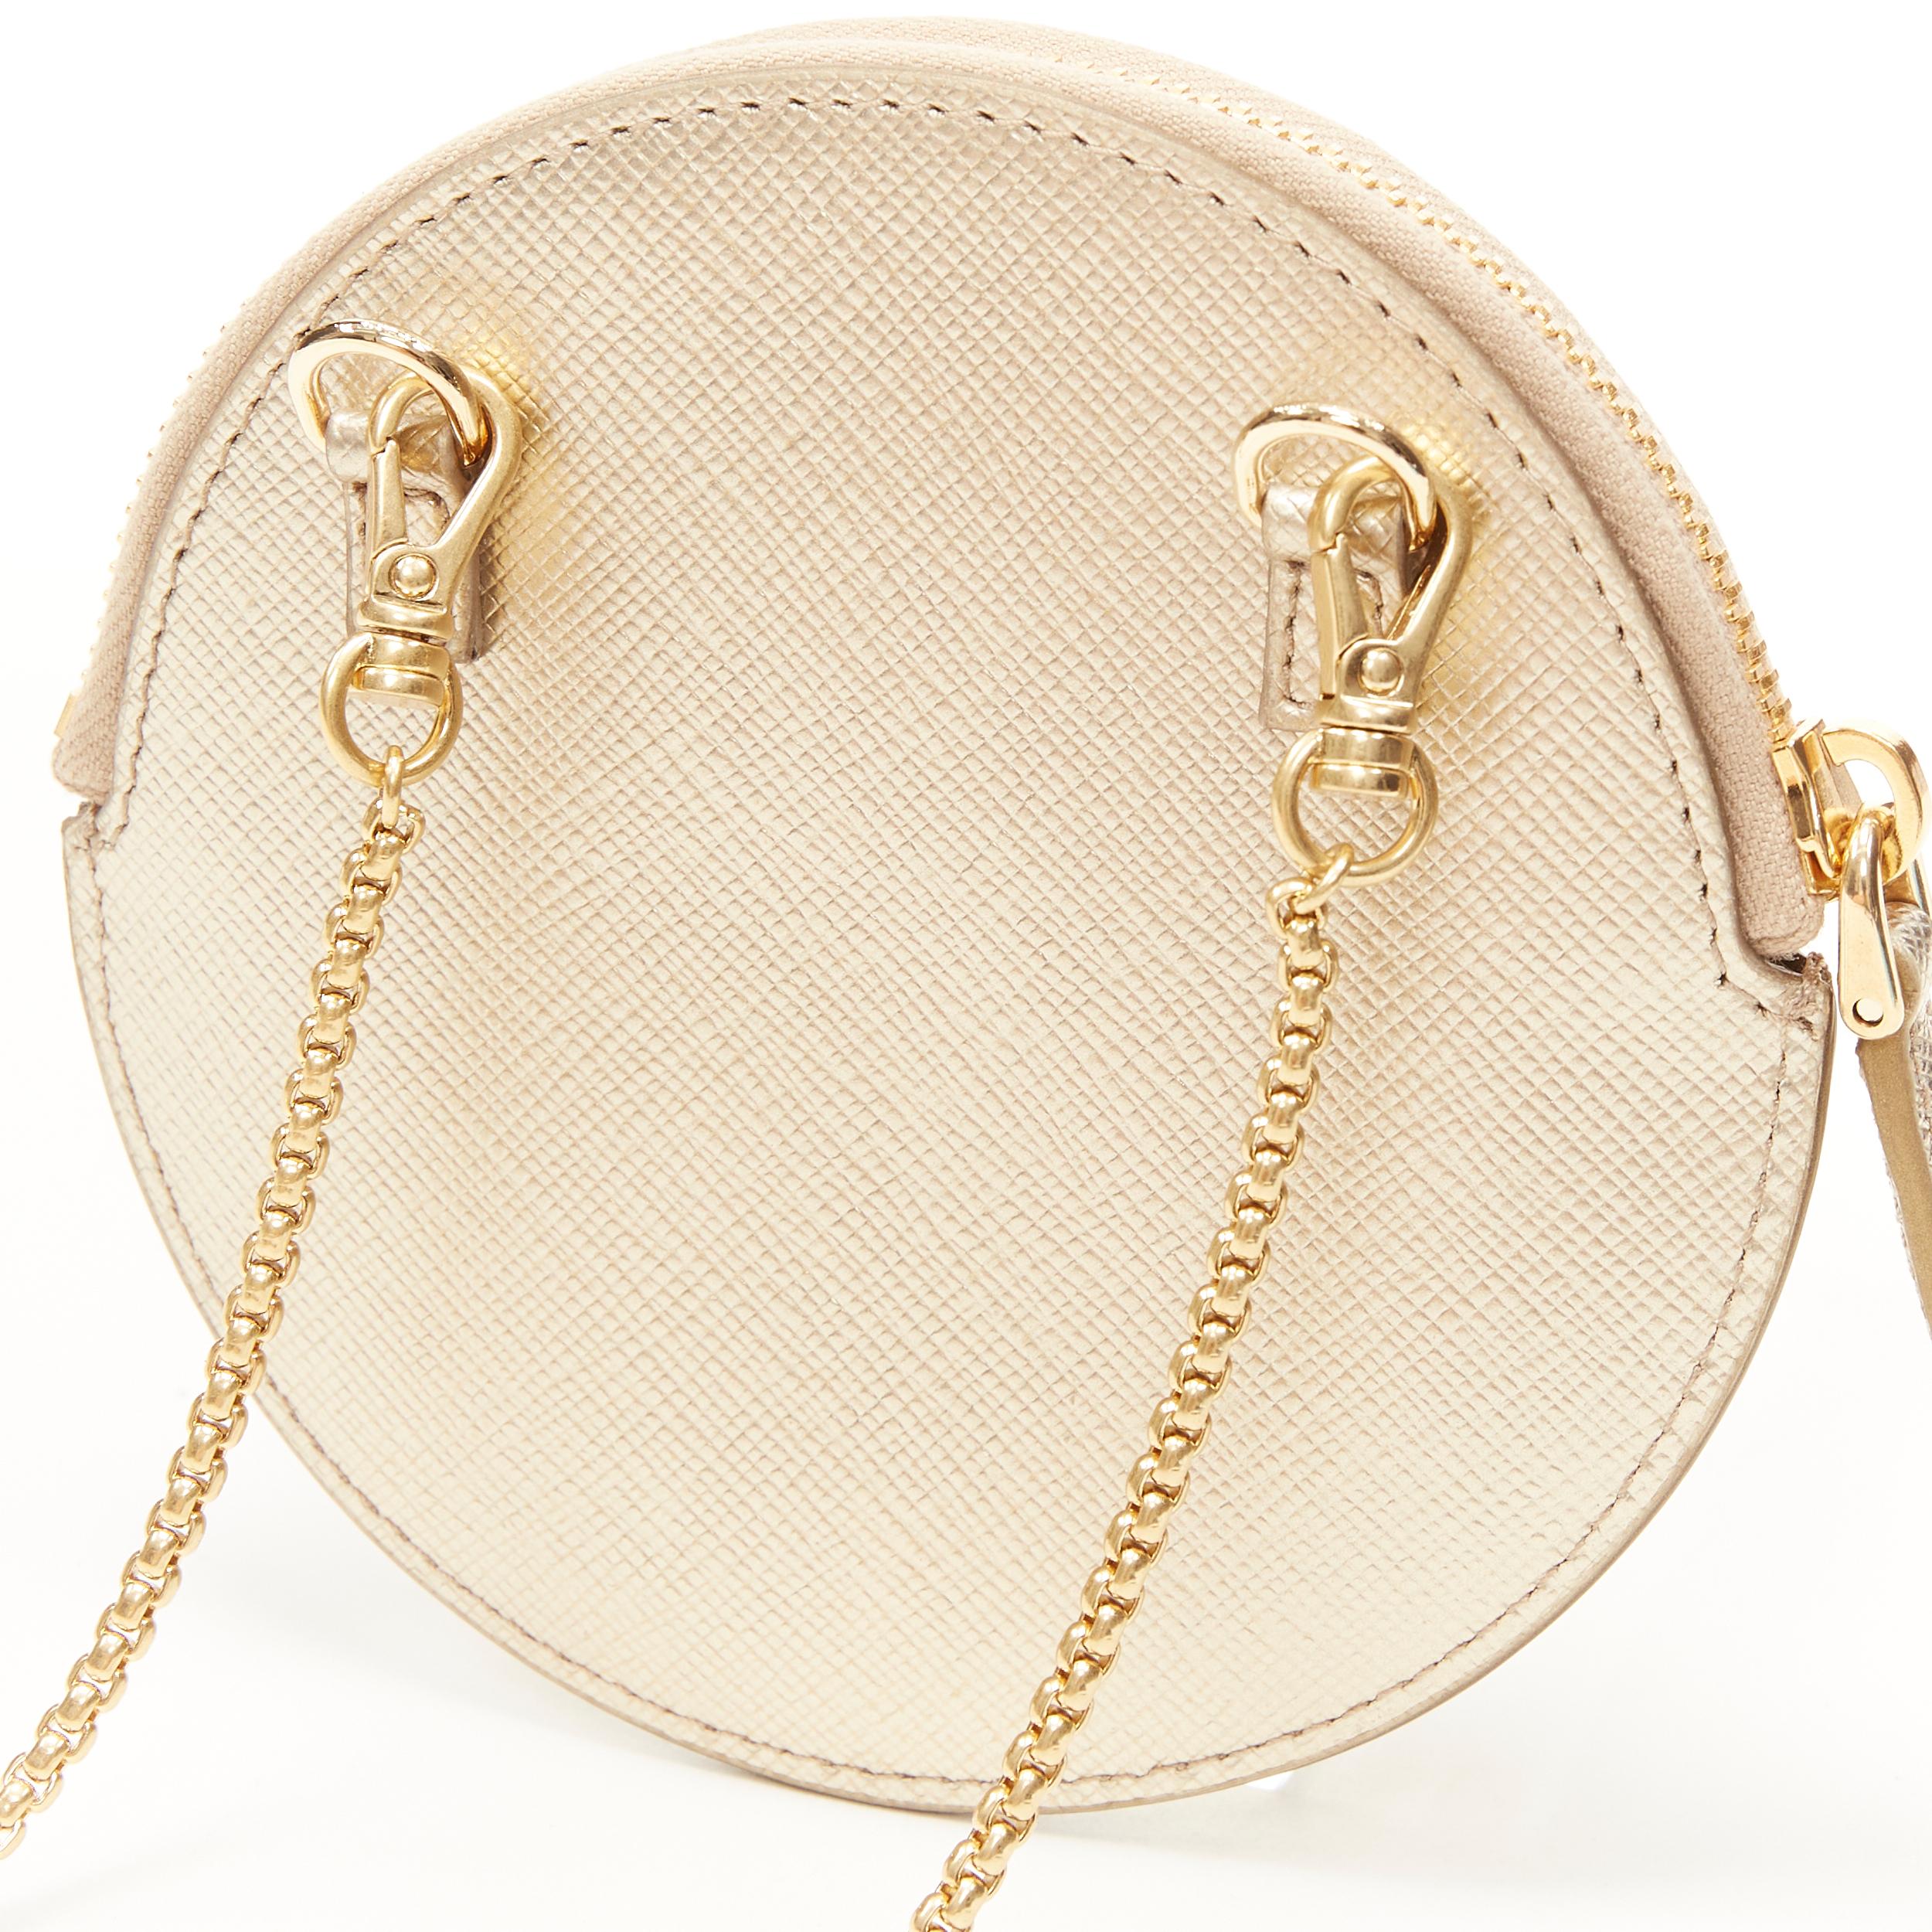 Gold new PRADA metallic gold saffiano leather triangle logo plate crossbody pouch bag